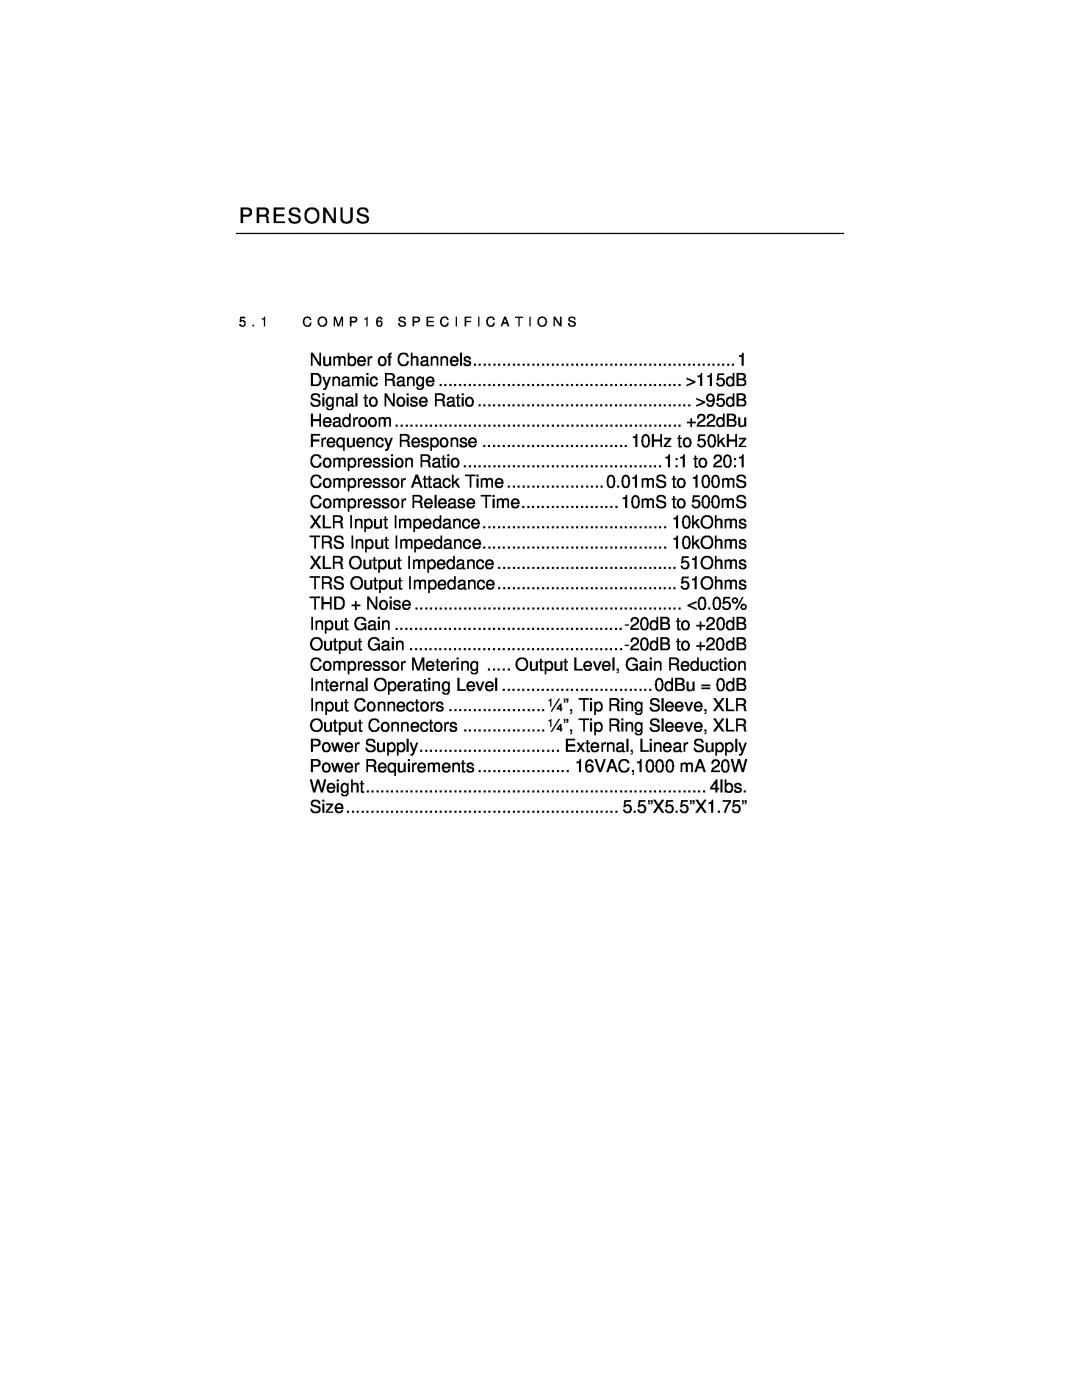 Presonus Audio electronic HP4, EQ3B, COMP16 user manual 115dB 